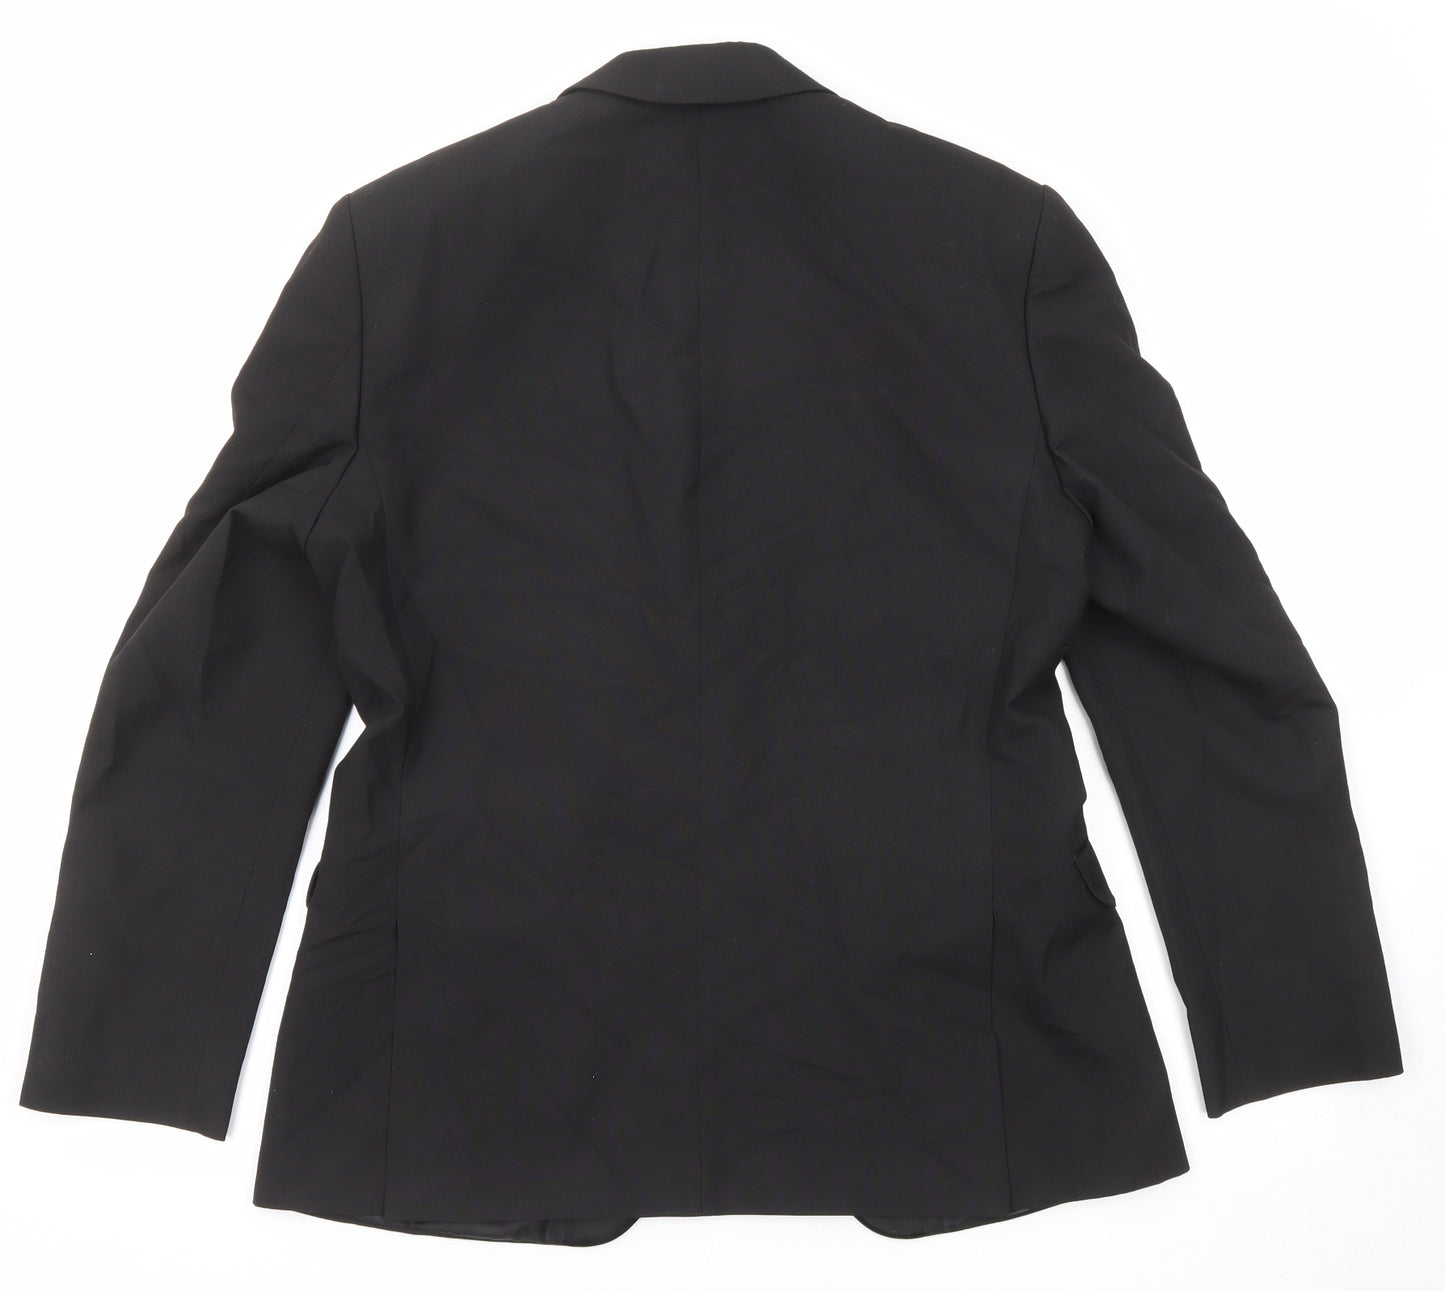 Ocassions Mens Black Polyester Tuxedo Suit Jacket Size 38 Regular